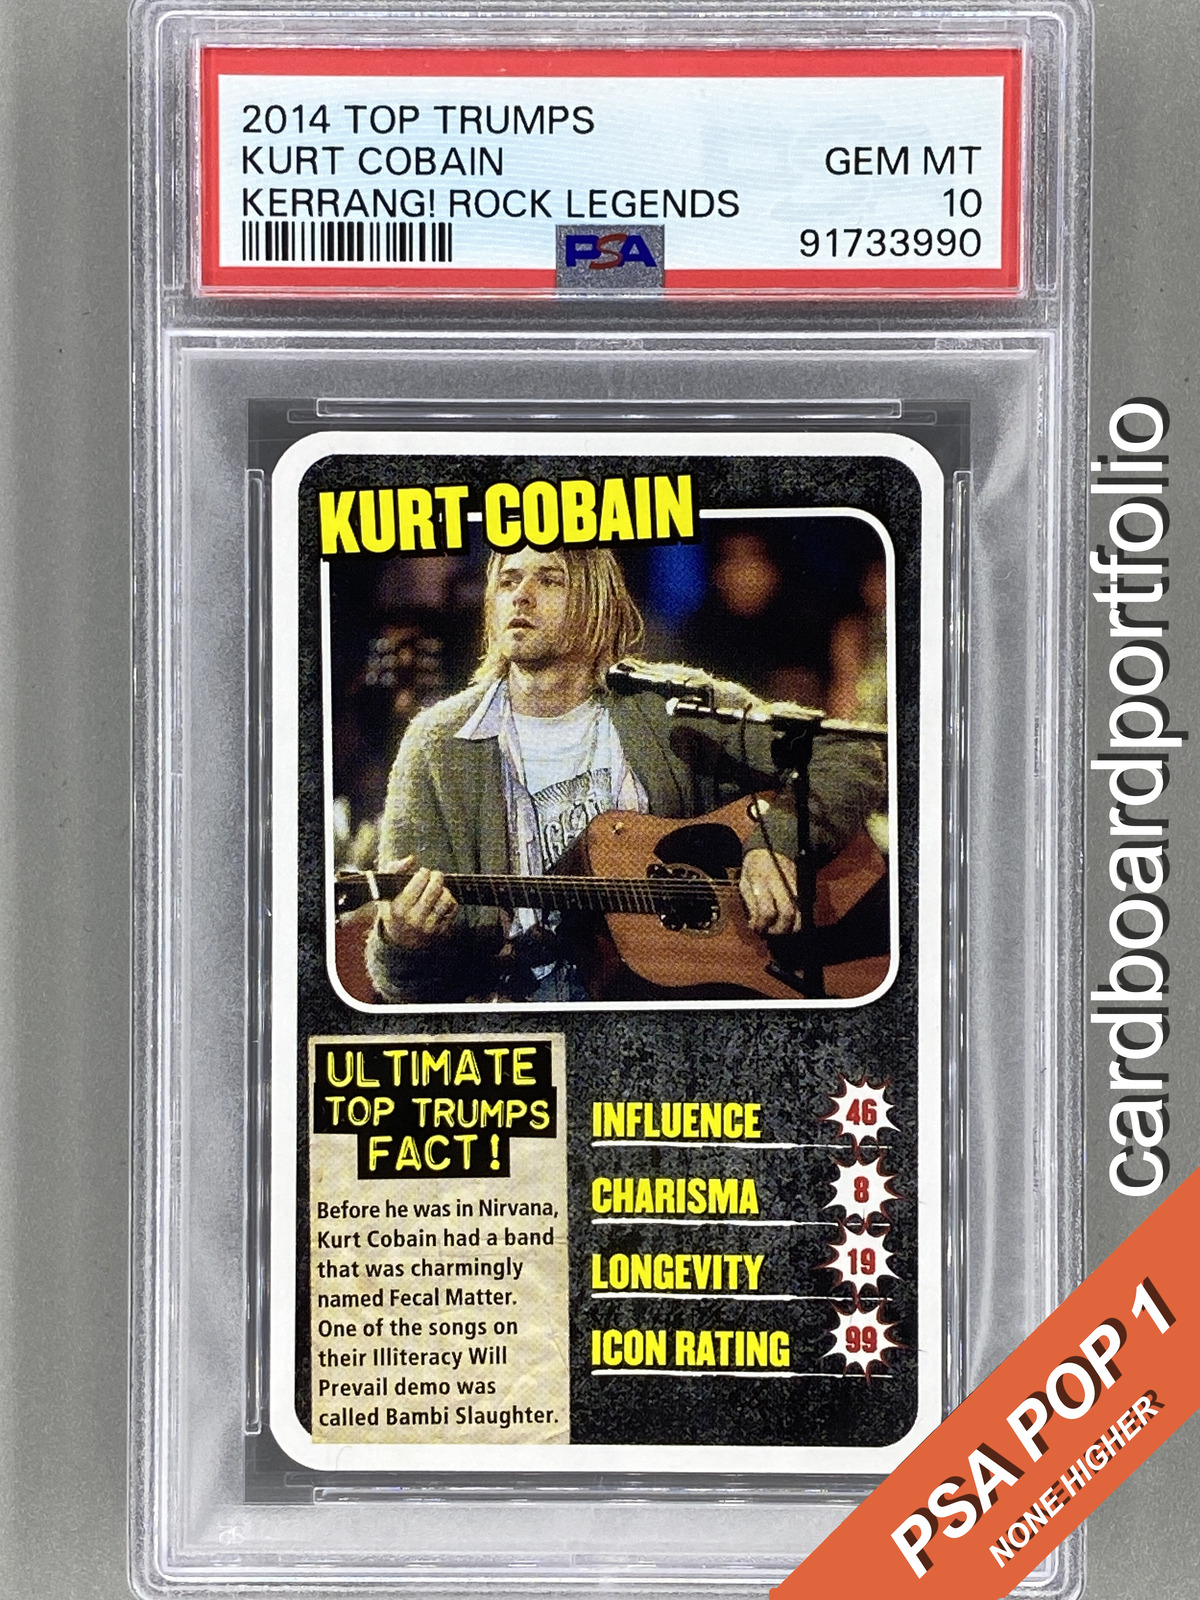 2014 Top Trumps Kurt Cobain Kerrang Rock Legends PSA 10 Pop 1 (Music)